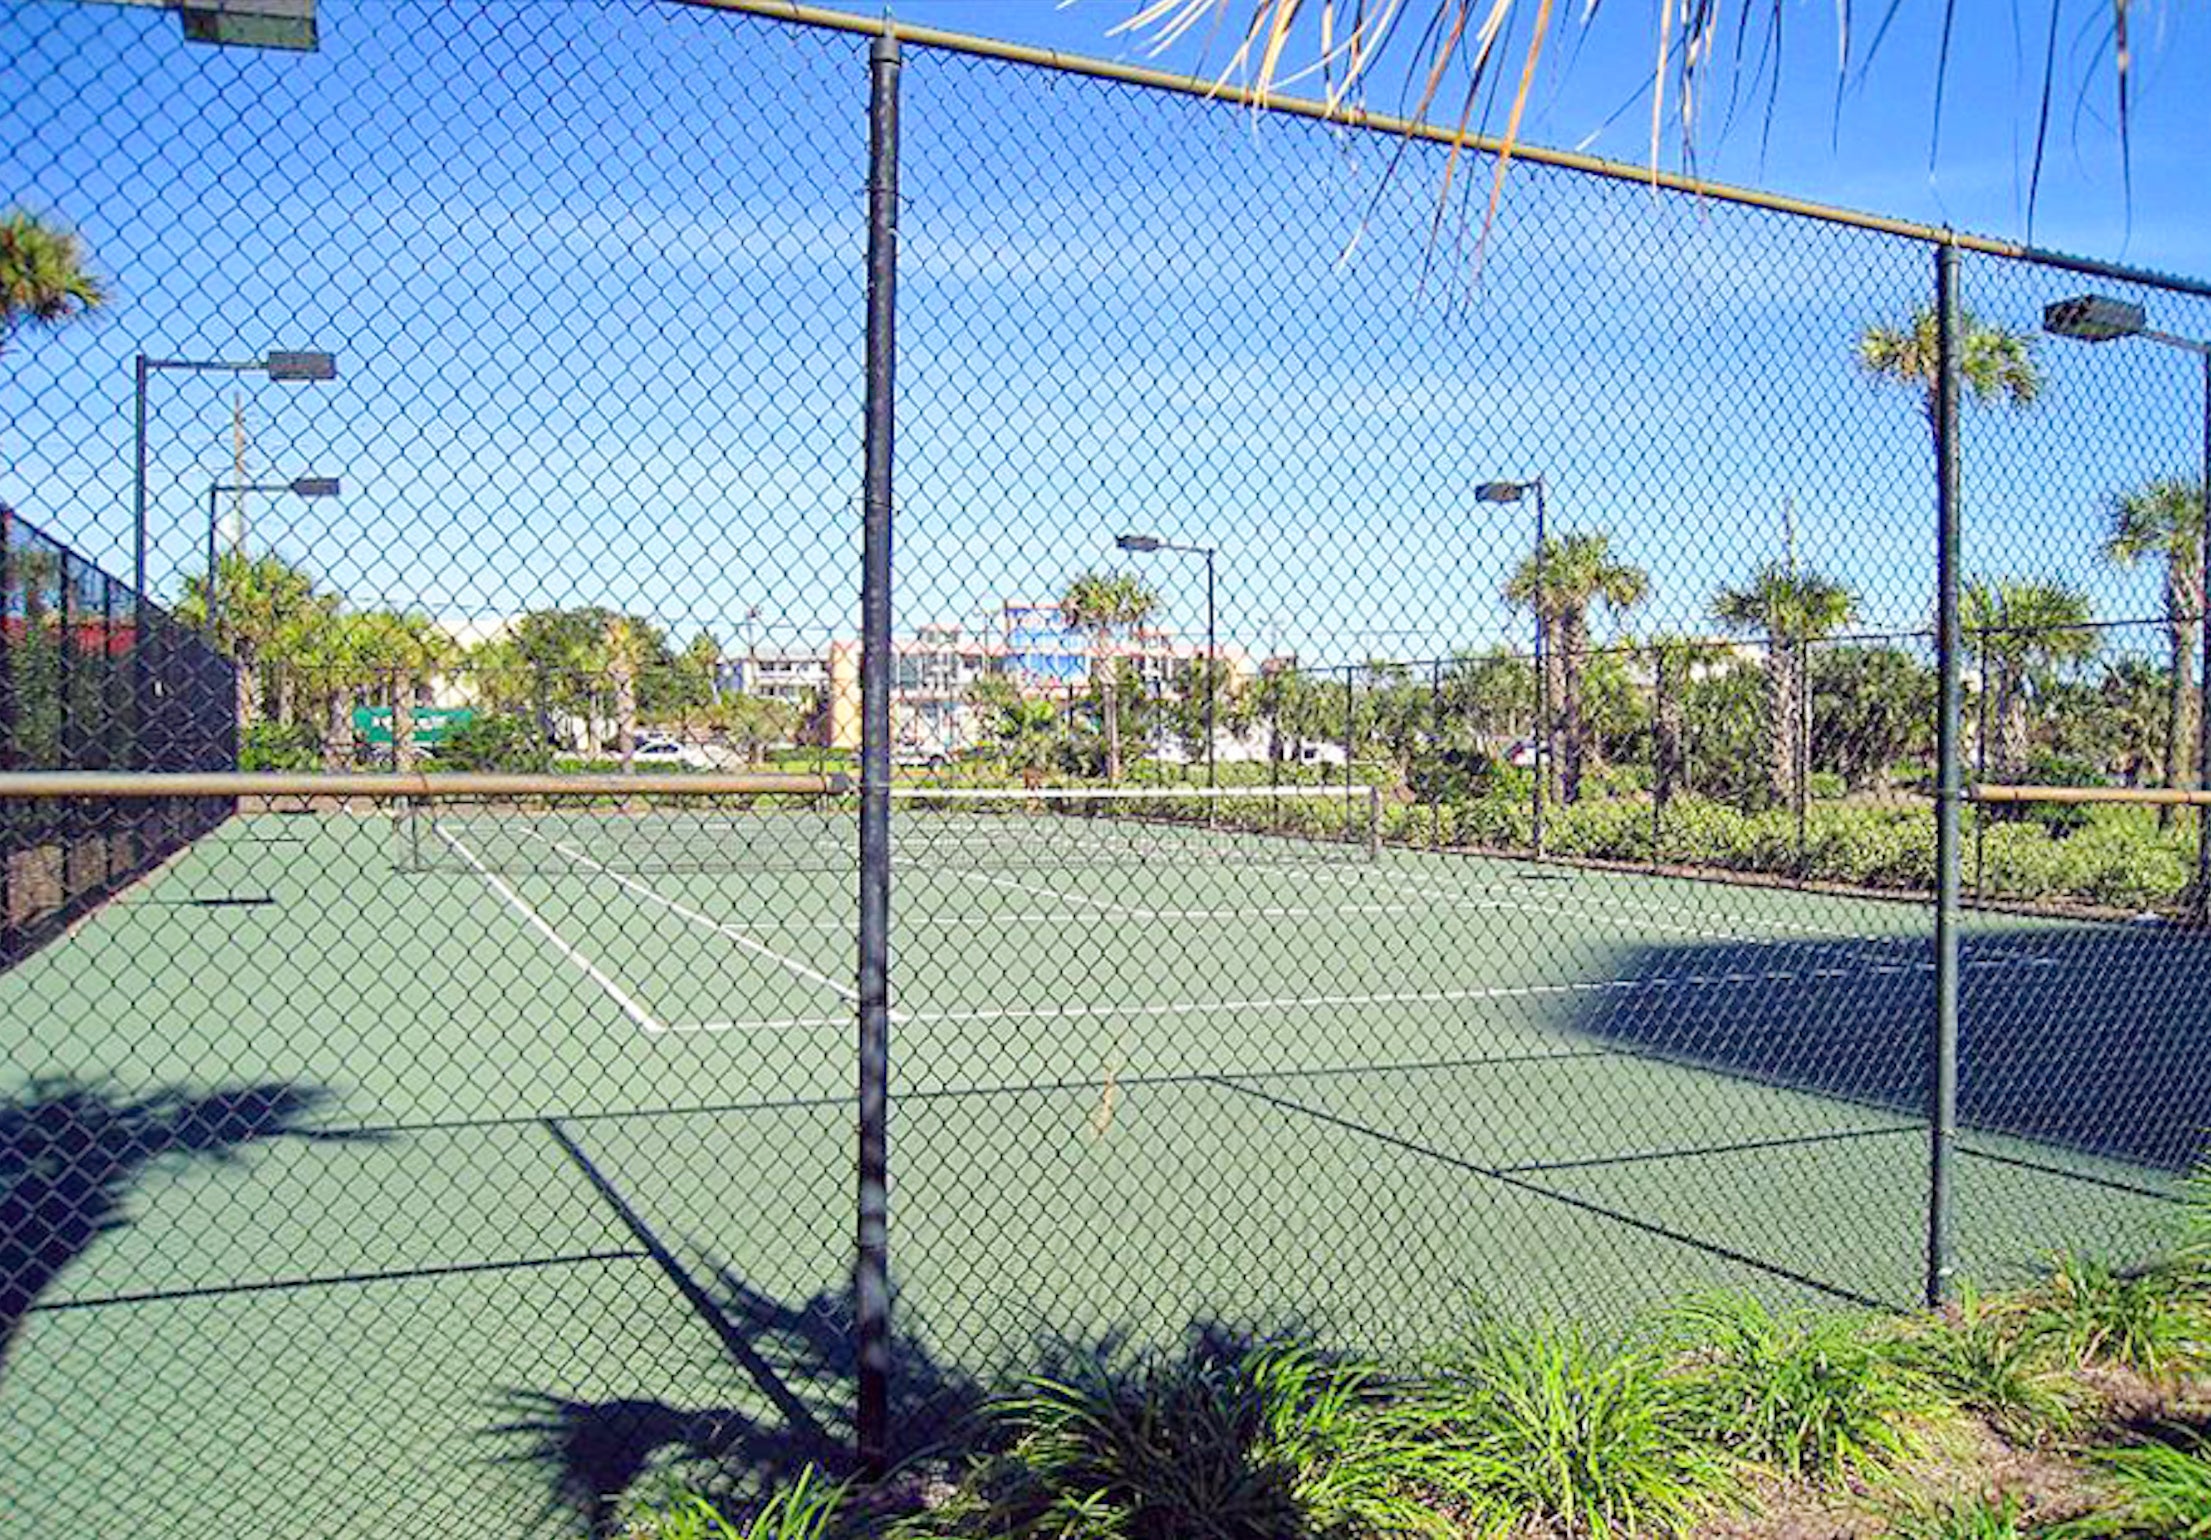 Tennis+Courts